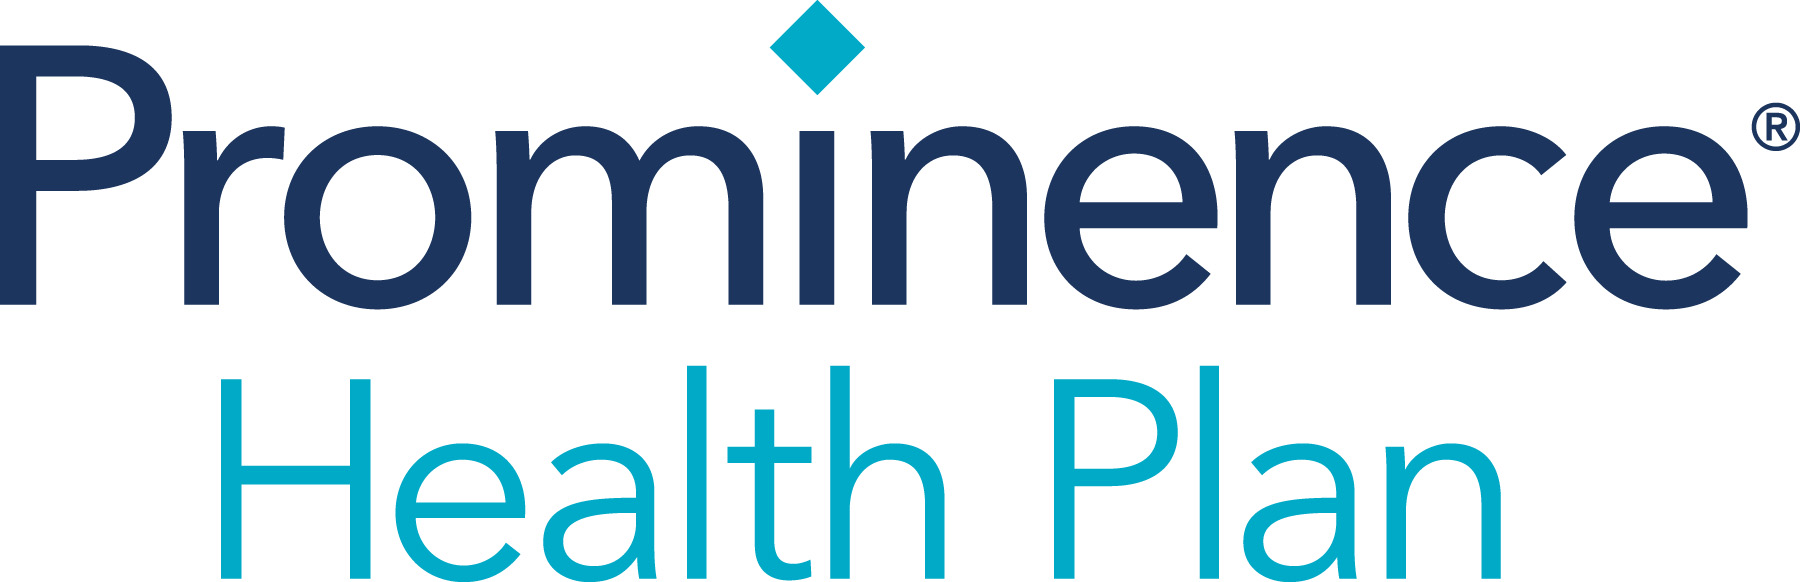 Prominence_HealthPlan_Logo_CMYK.jpg